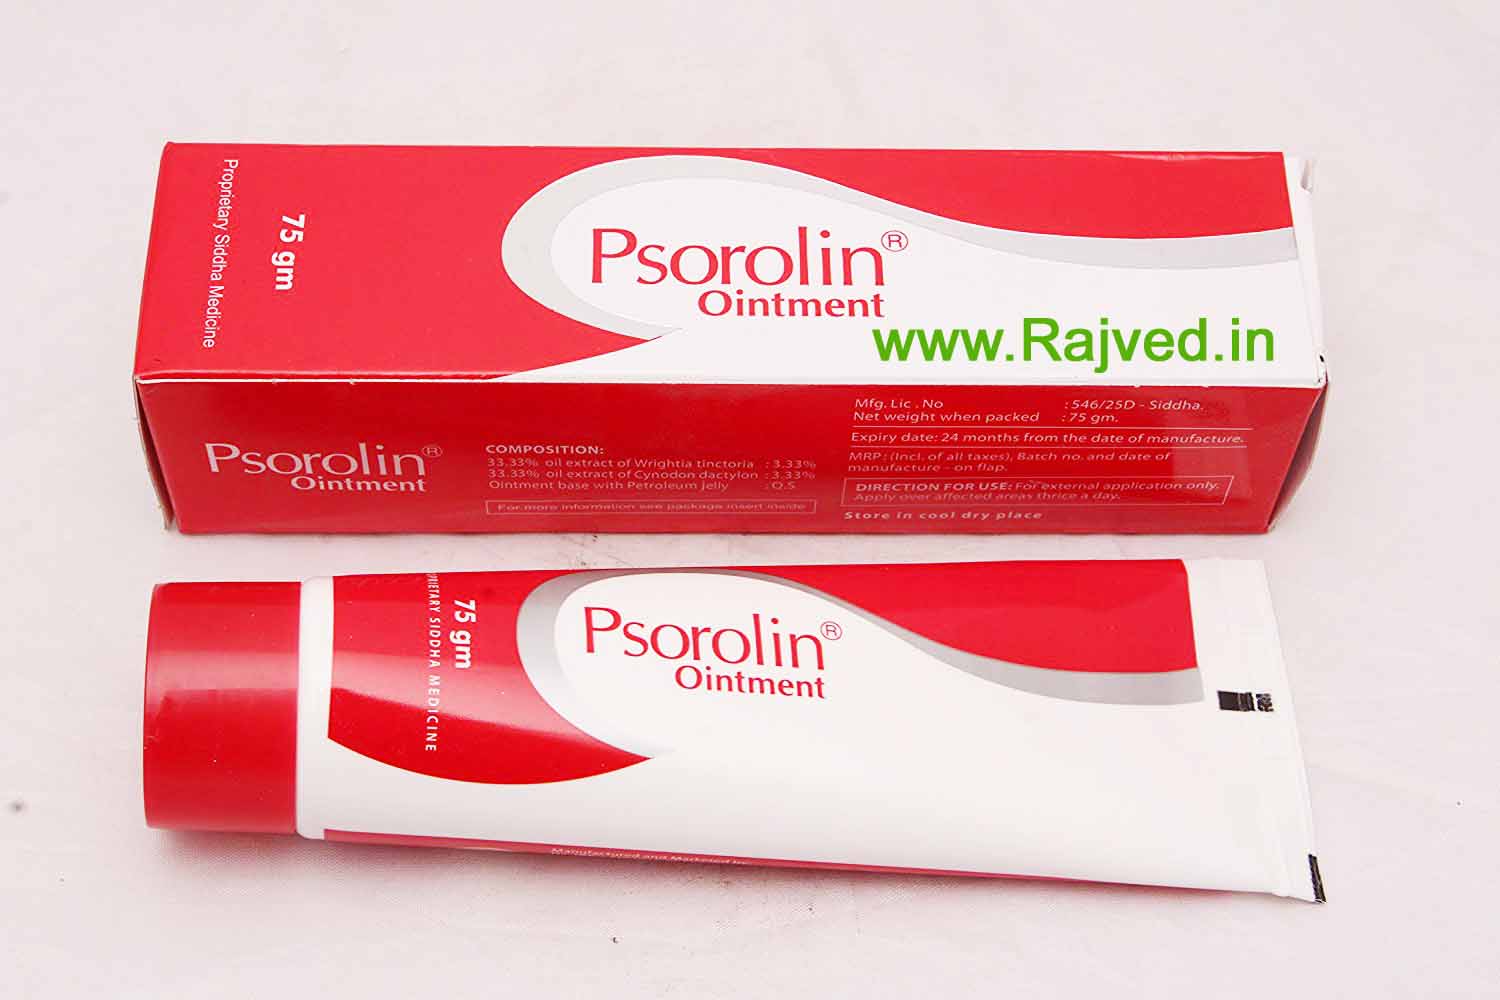 Psorolin oint 75 gm now psorolin B ointment 75gm 15% off dr.jrk siddha research pharma